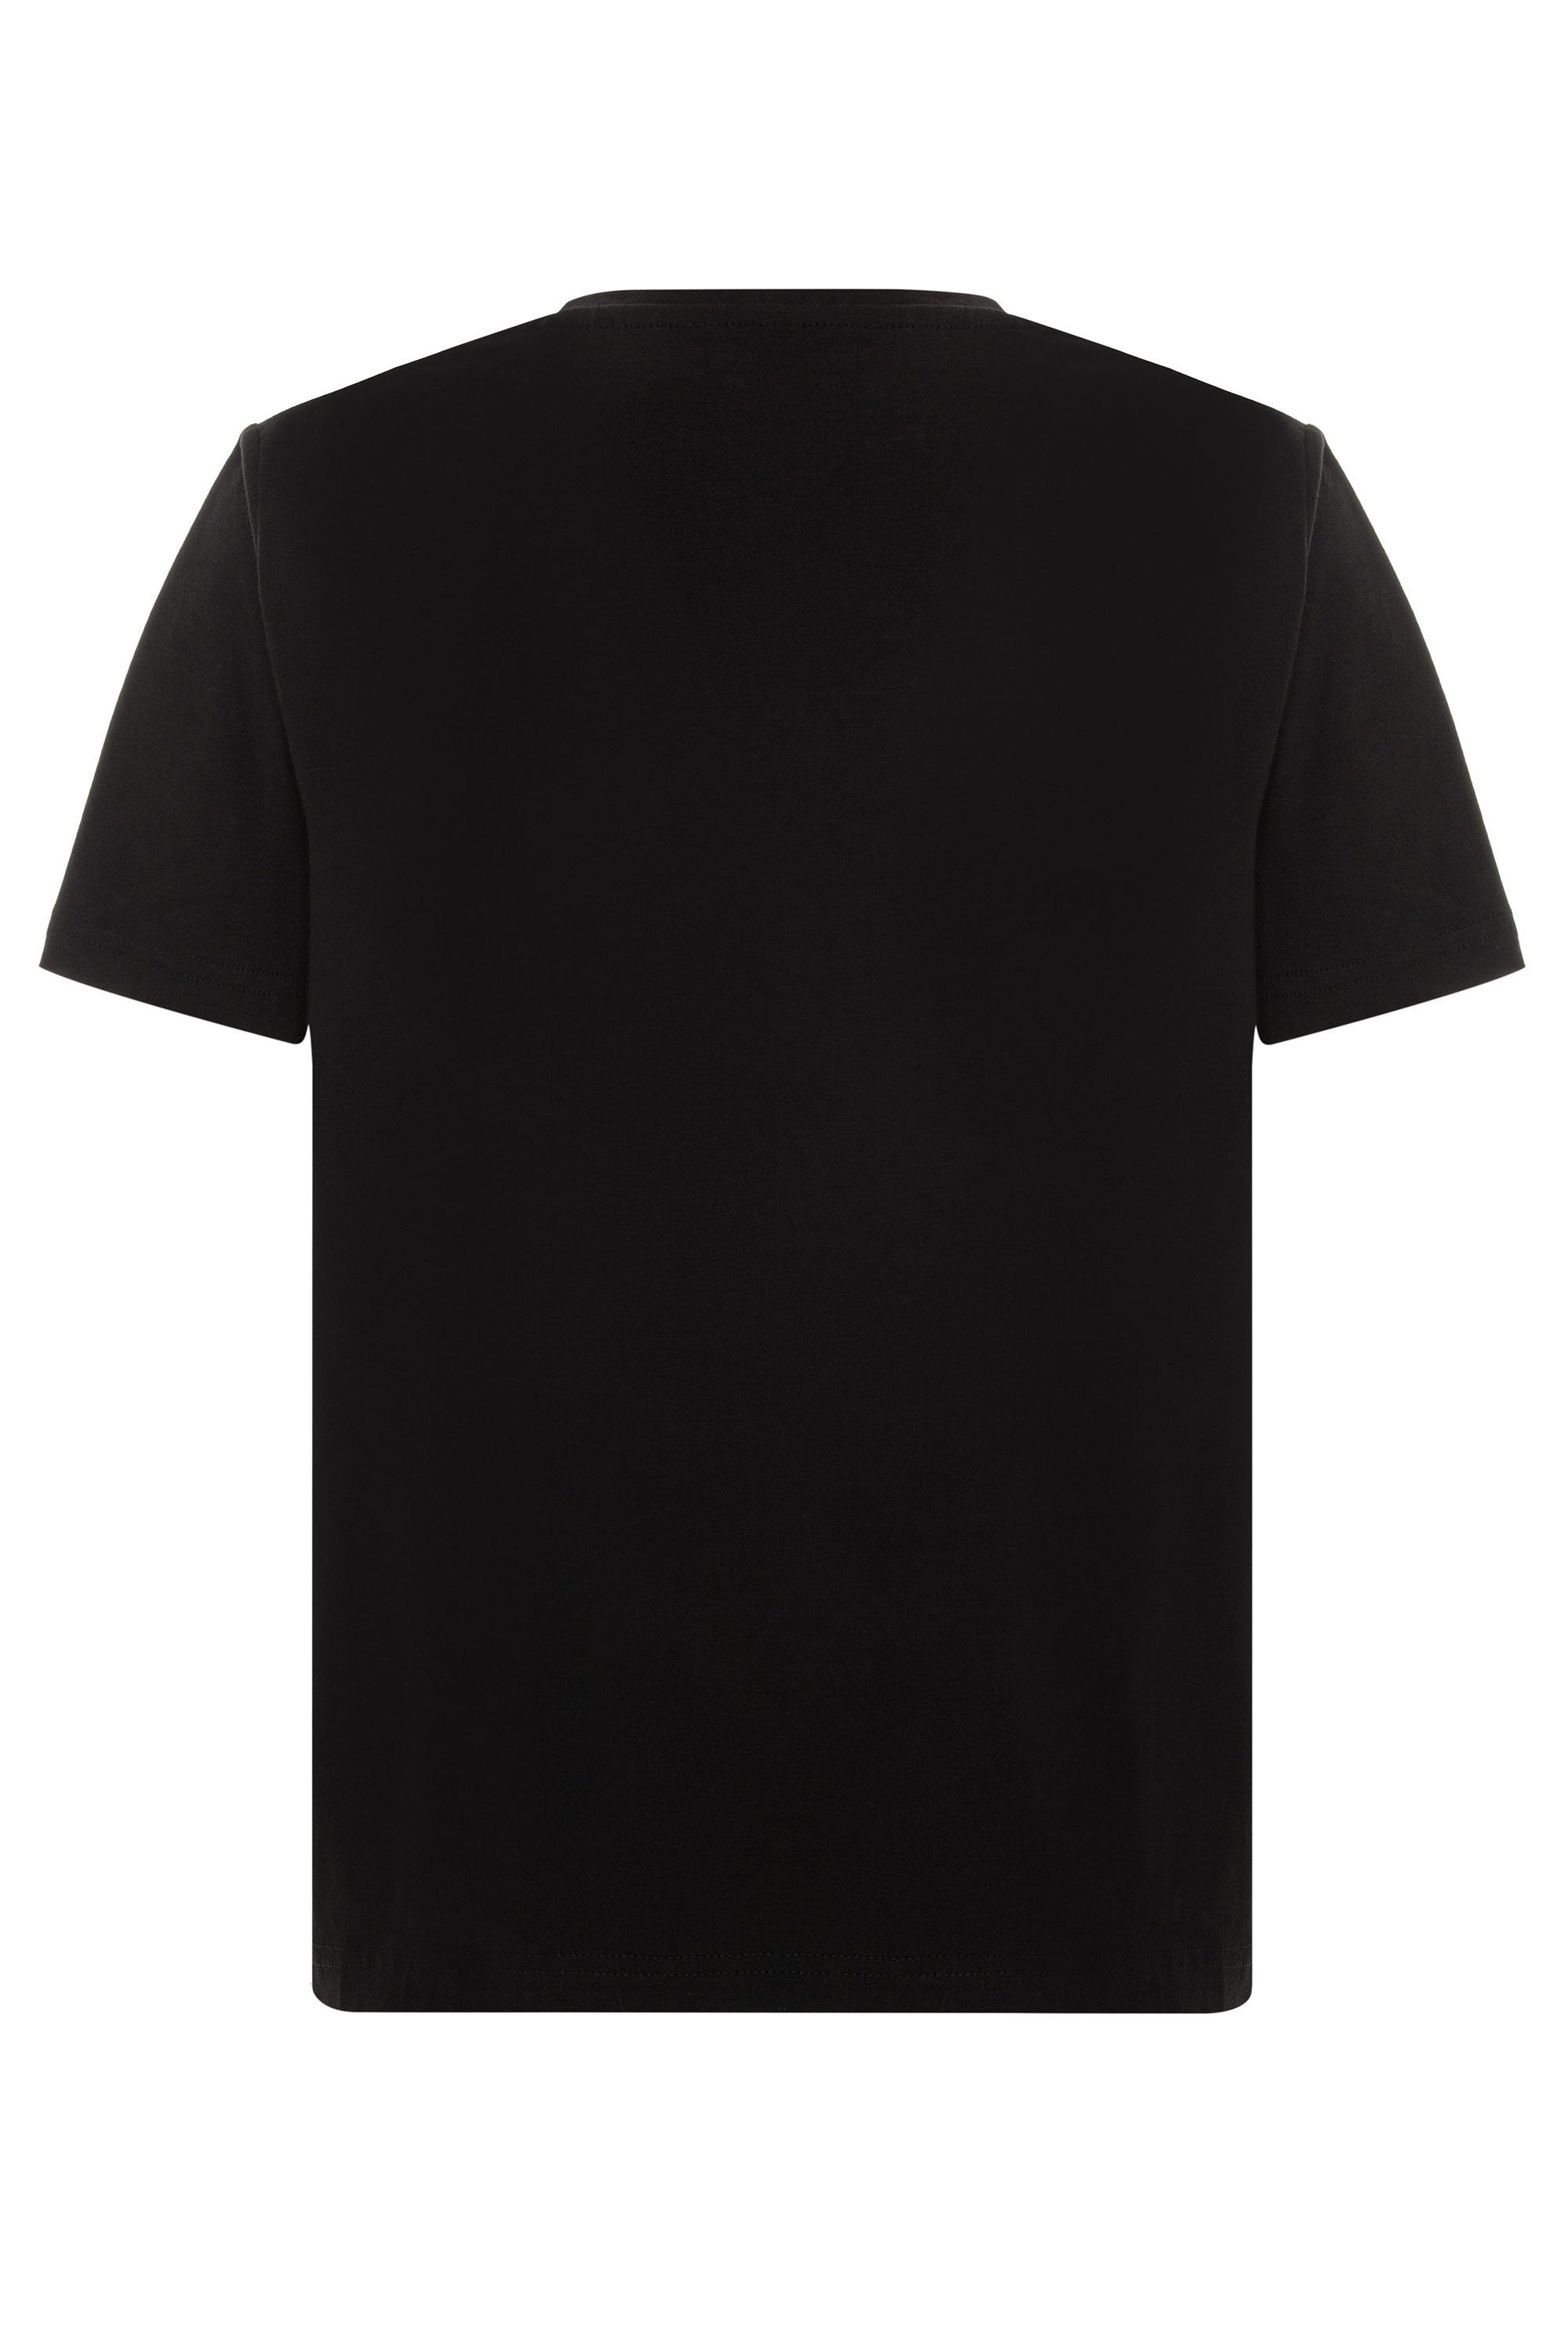 Cipo & Baxx T-Shirt schwarz-weiß Print mit coolem